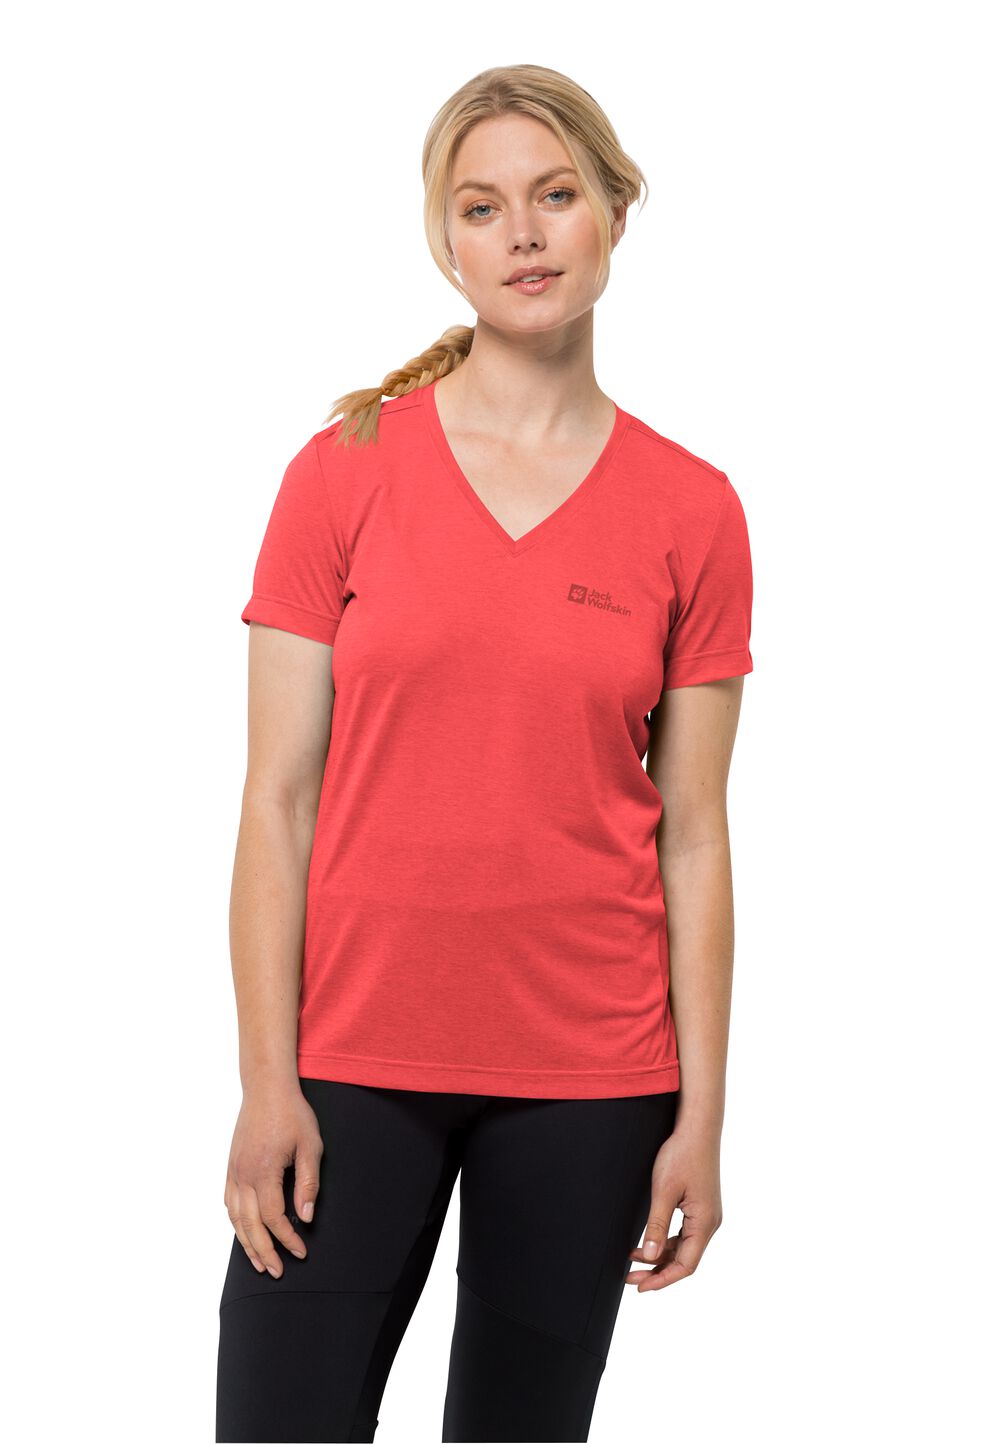 Jack Wolfskin Crosstrail T-Shirt Women Functioneel shirt Dames M rood vibrant red